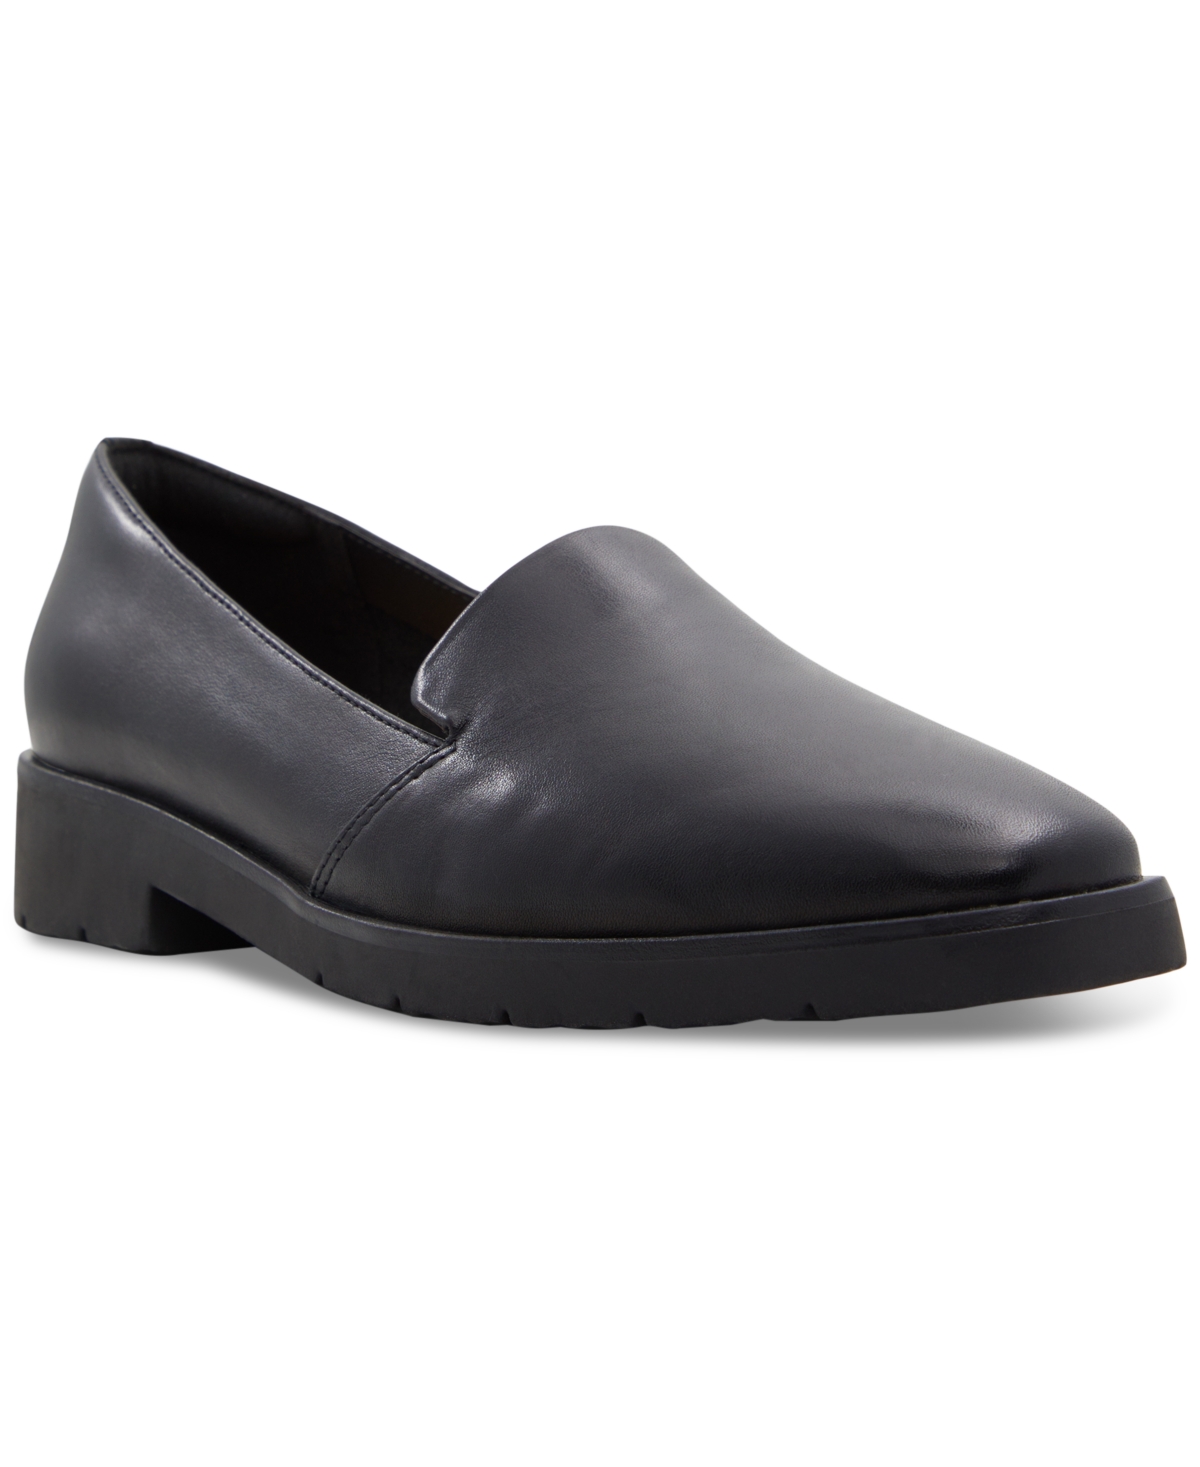 Women's Cherflex Slip-On Tailored Loafer Flats - Black Leather